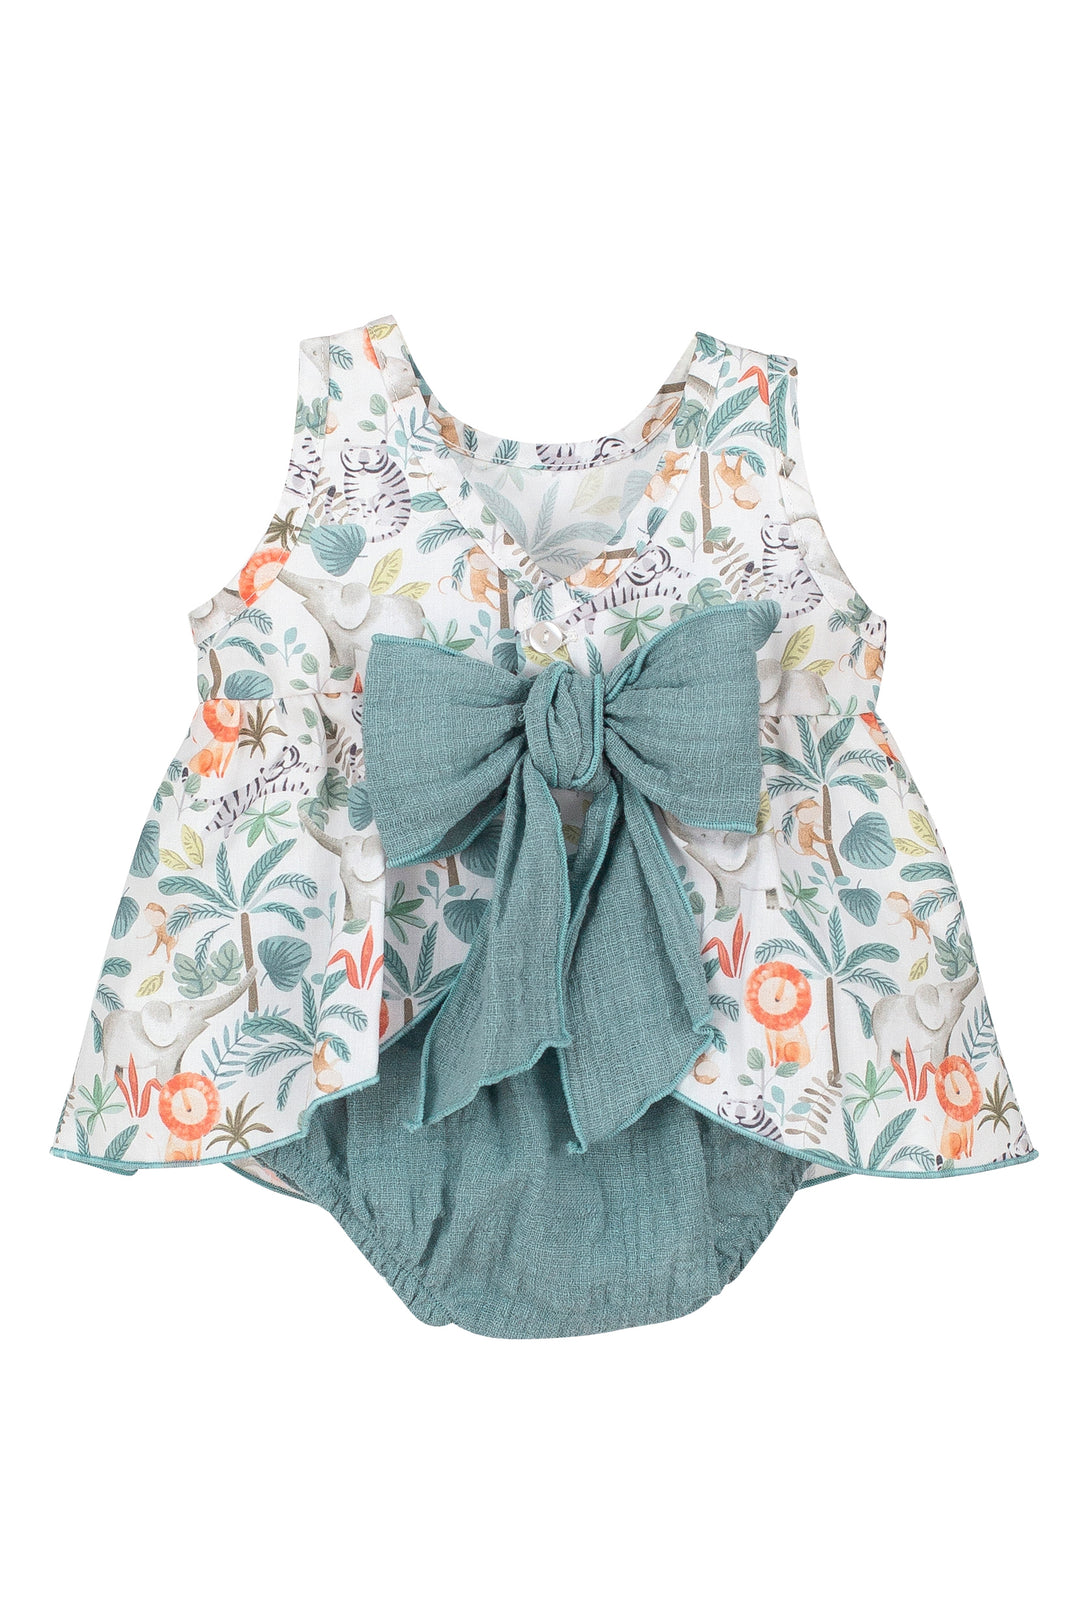 Calamaro "Orelia" Teal Jungle Print Dress & Bloomers | Millie and John